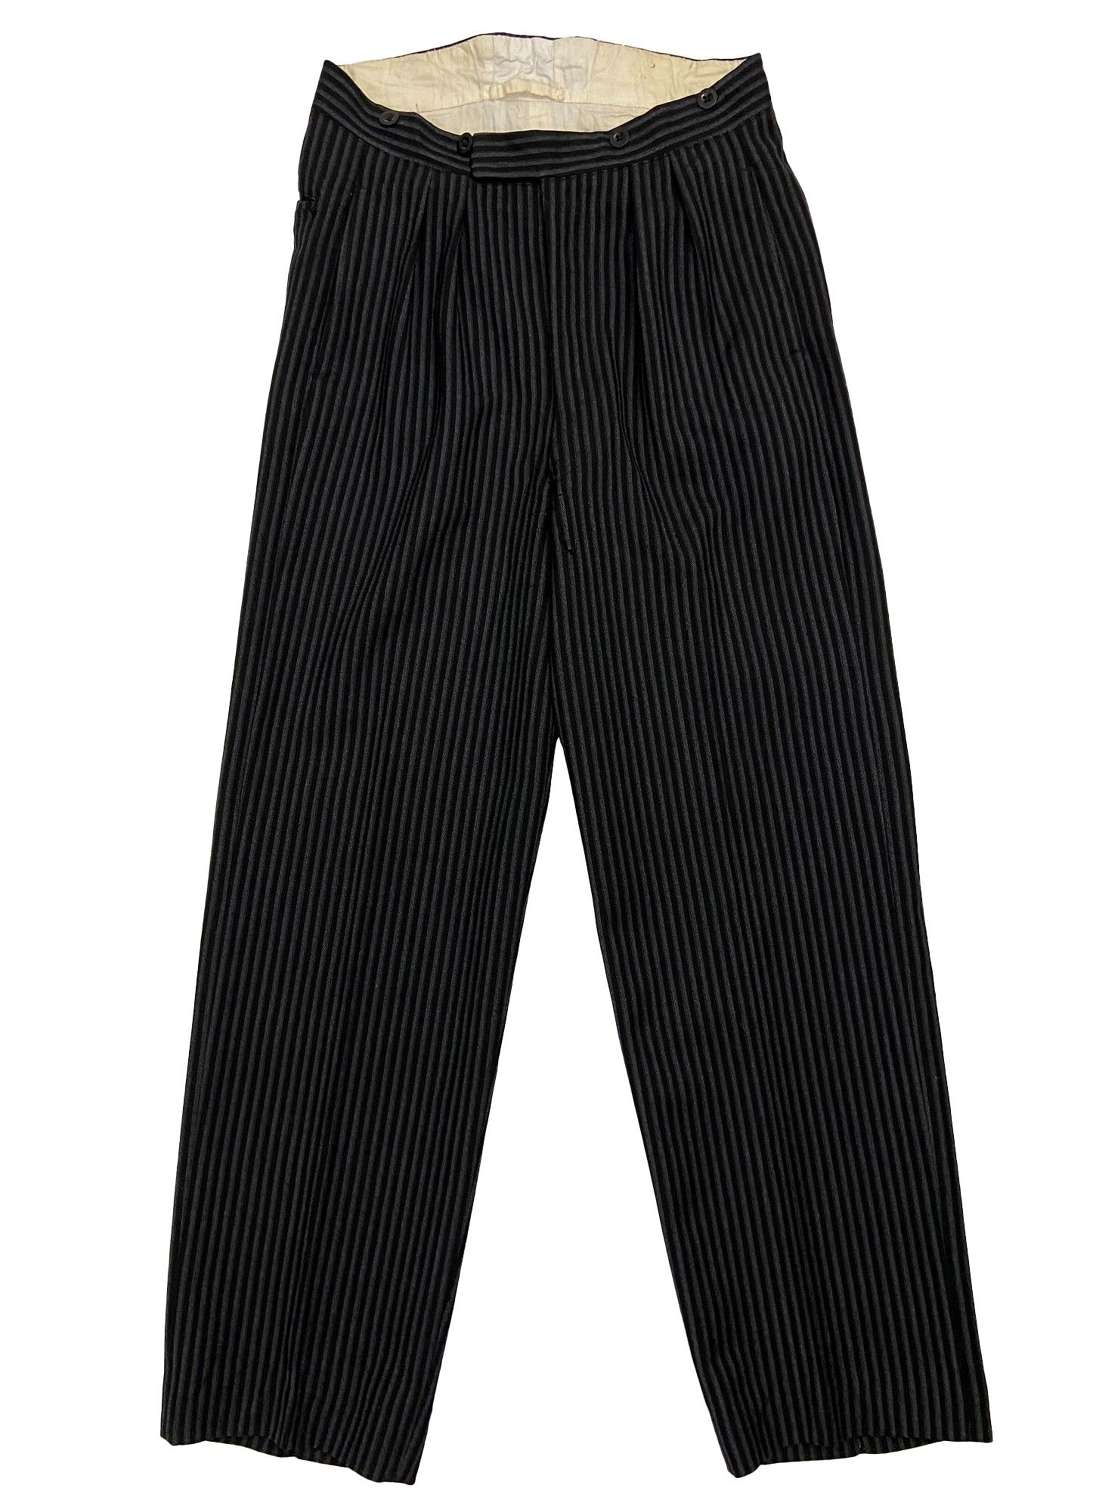 Original 1940s Men's Morning Stripe Trousers by 'McLaren'